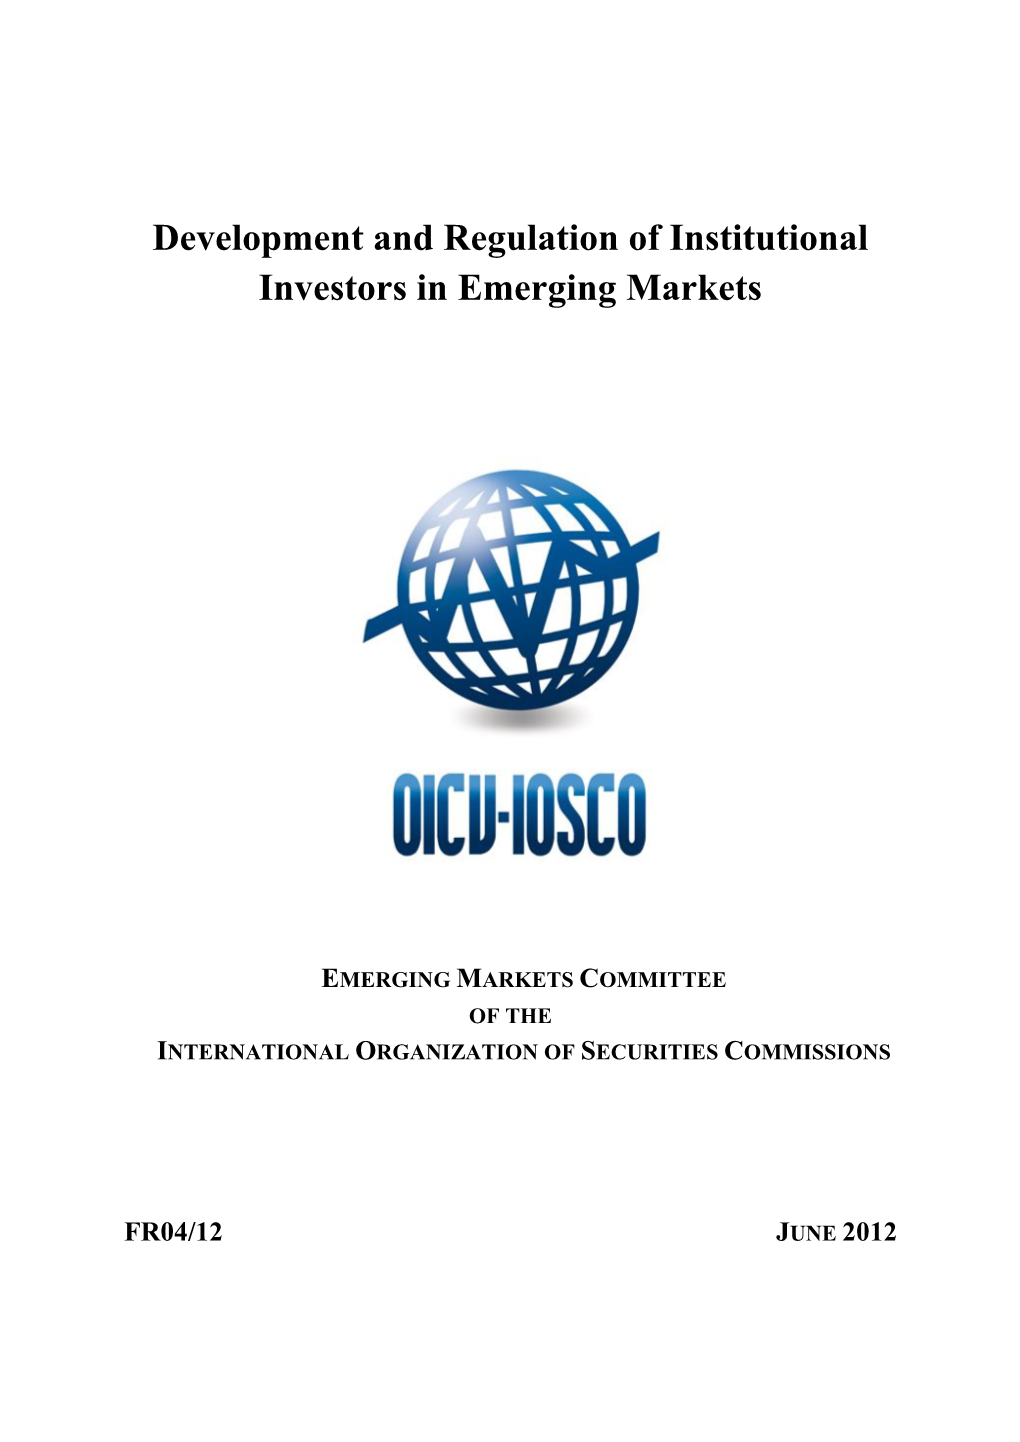 Development and Regulation of Institutional Investors in Emerging Markets